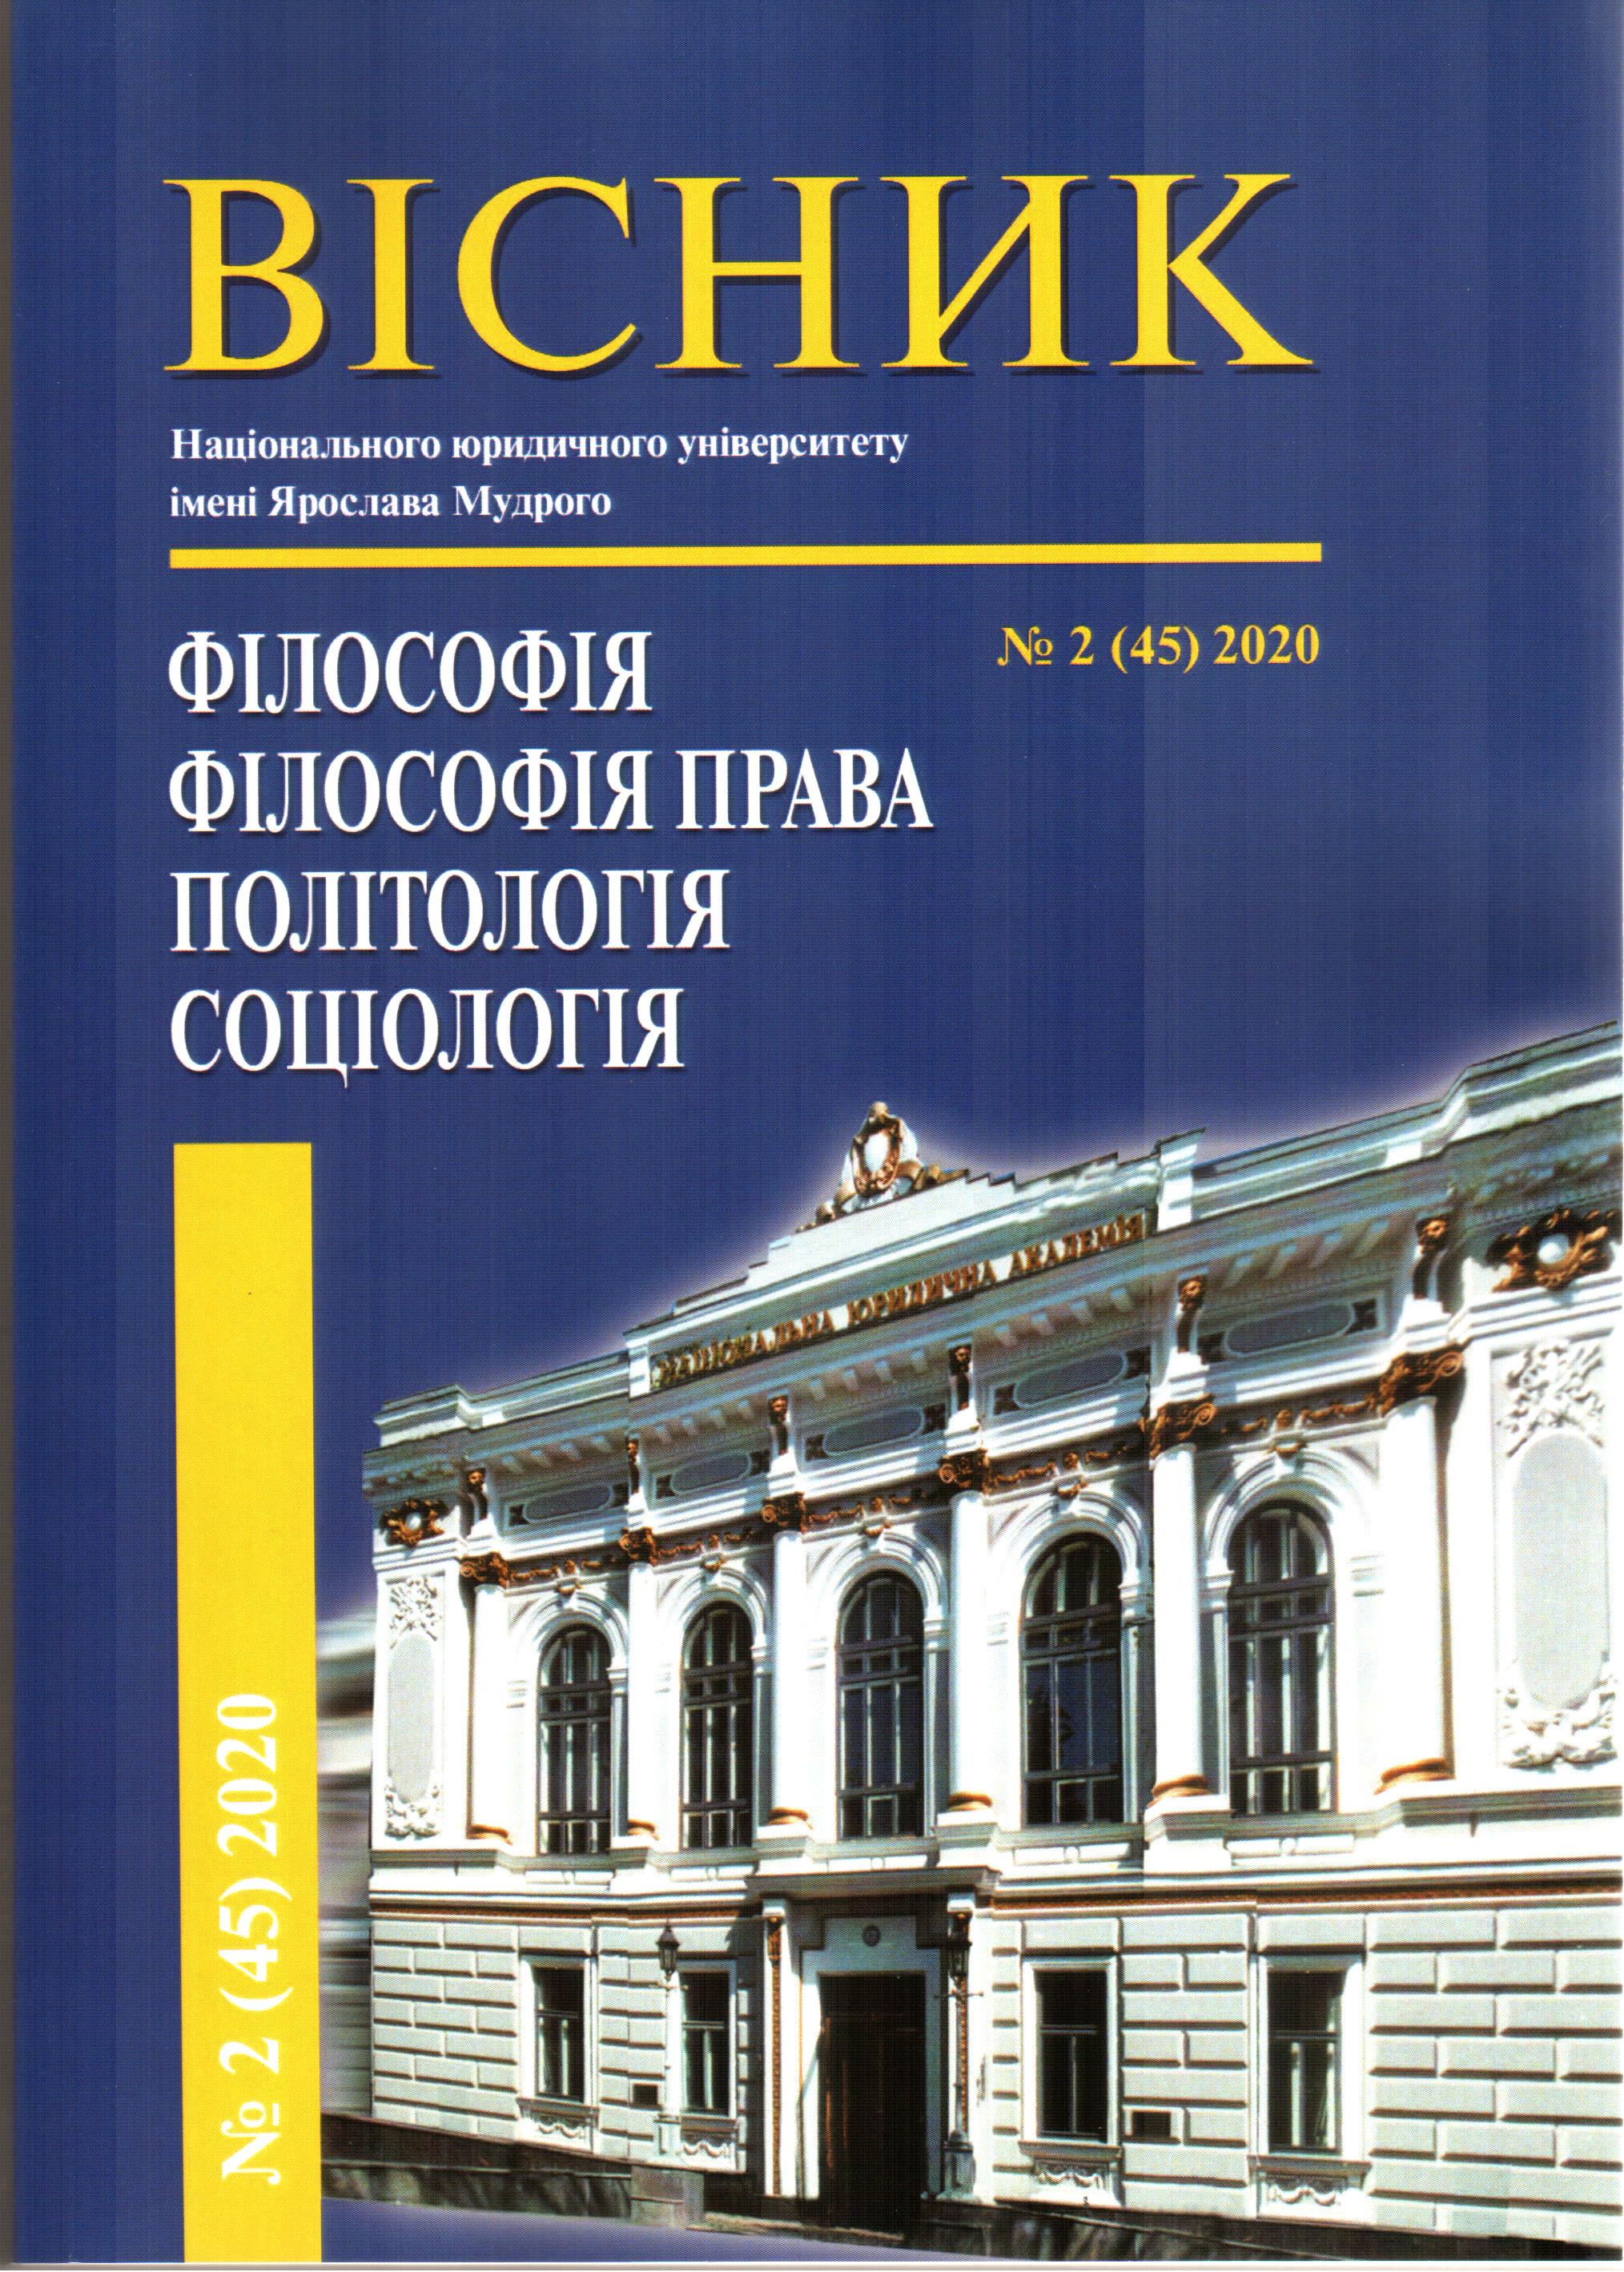 THE PHENOMENON OF THE UKRAINIAN DIASPORA:
THE PROBLEM OF PRESERVING ETHNIC IDENTITY AND DEVELOPMENT Cover Image